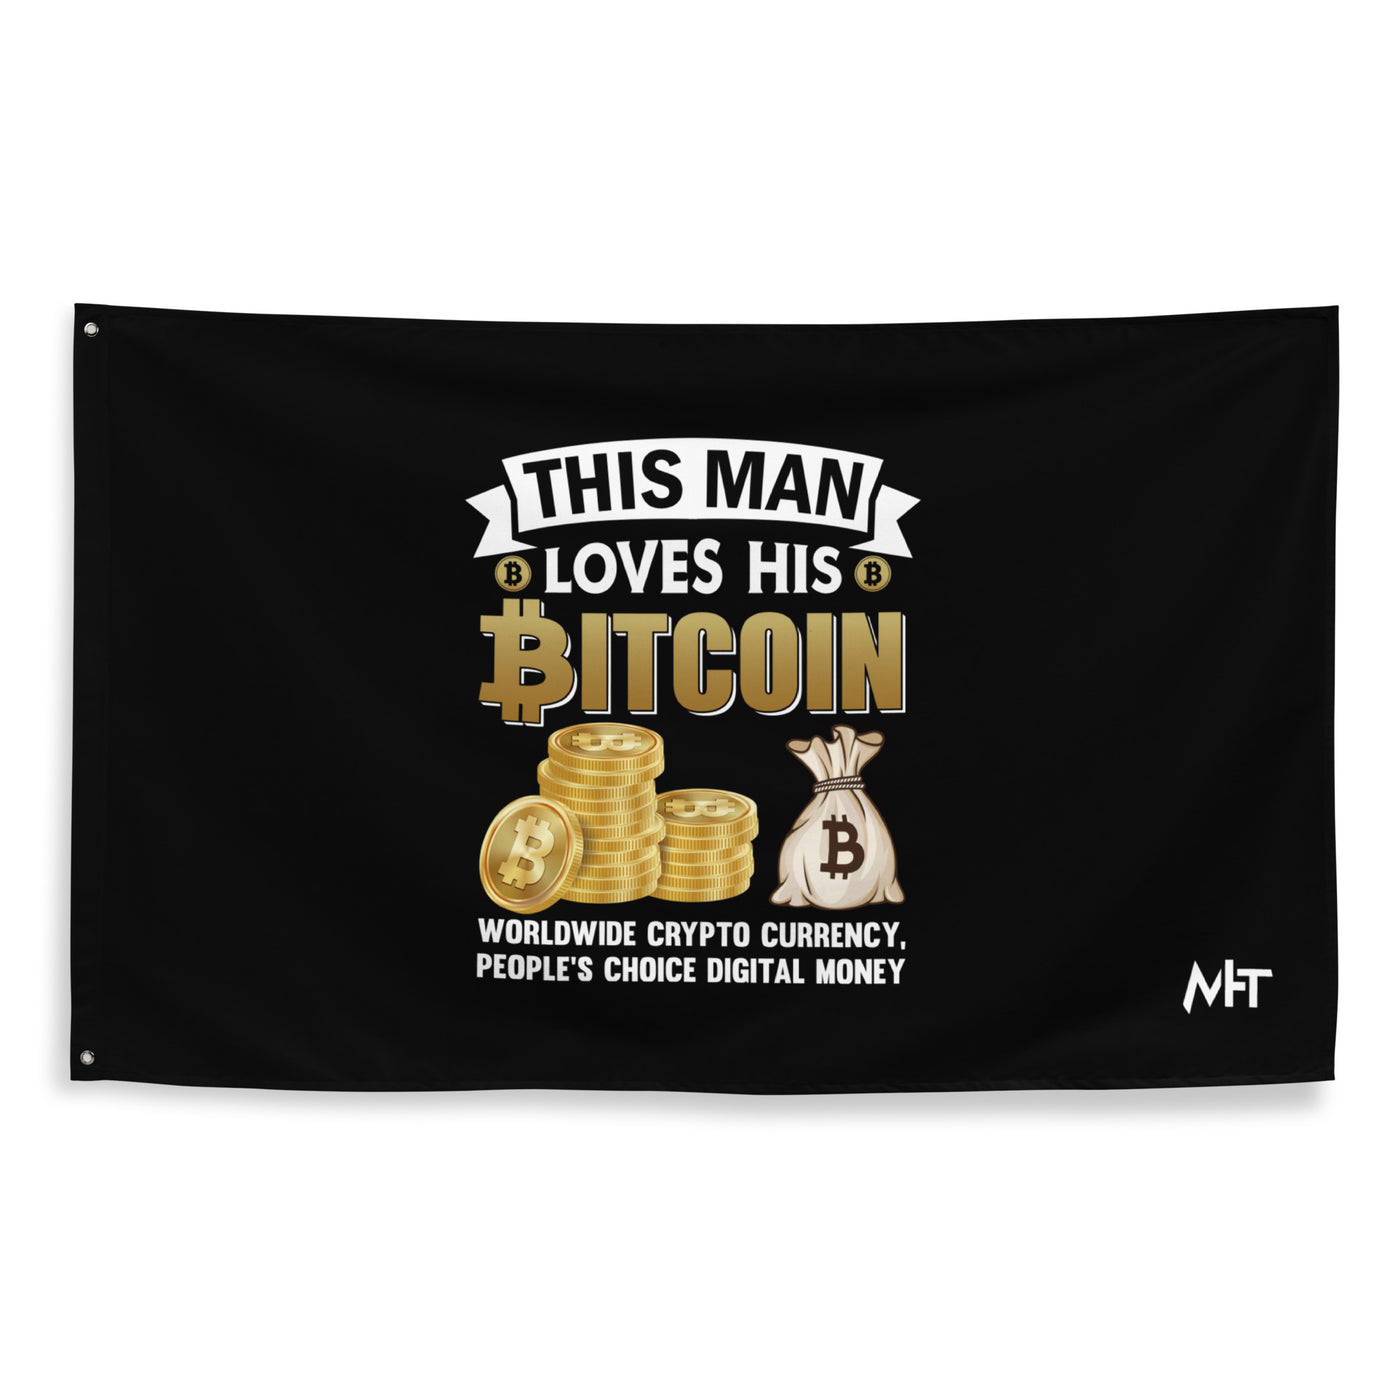 This Man loves his Bitcoin - Flag